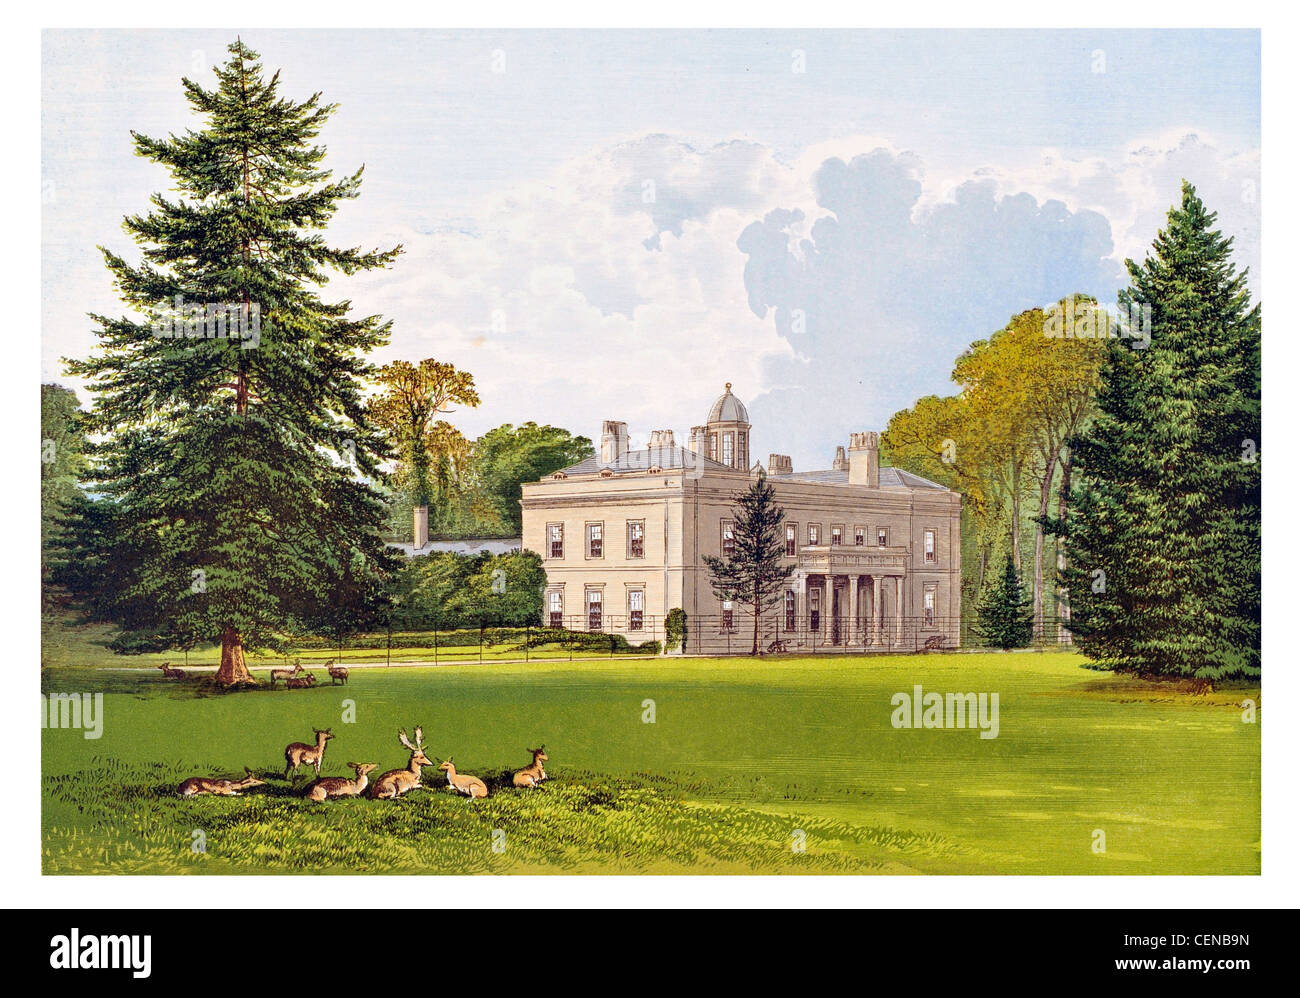 Brookley Hall Grande-Bretagne Angleterre Parkland Park Mansion Manor House Stately Home Palais Hall Estate Château Jardin paysagé Banque D'Images